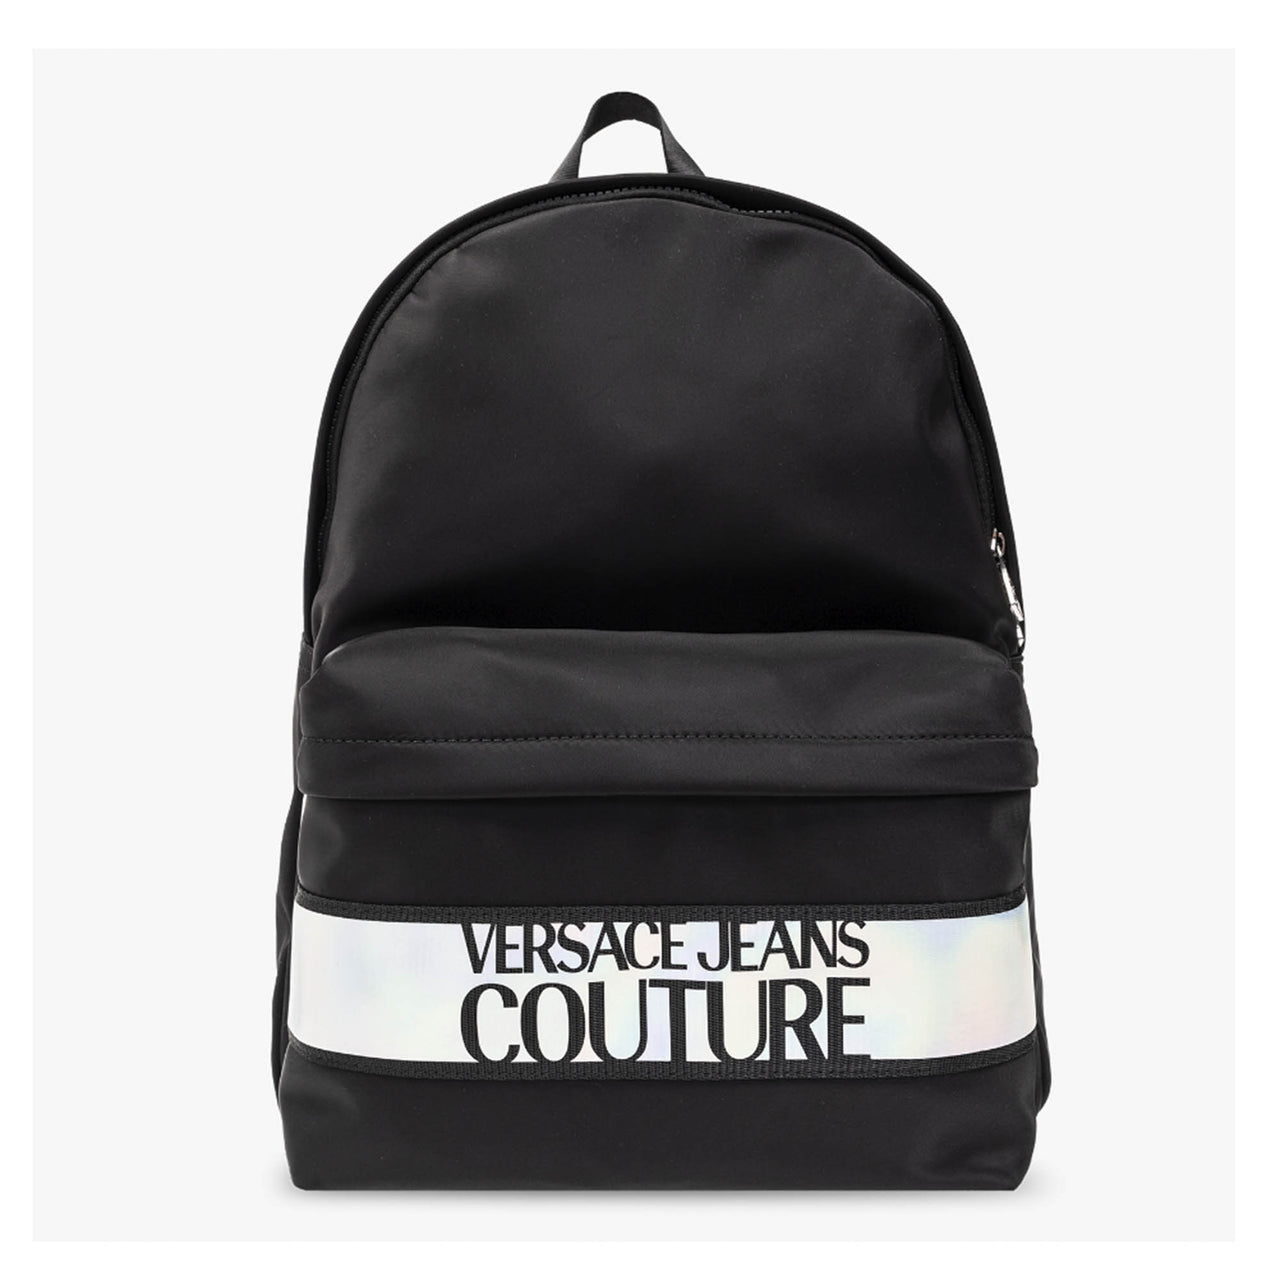 Backpack Versace Jeans Cuoture negra unisex